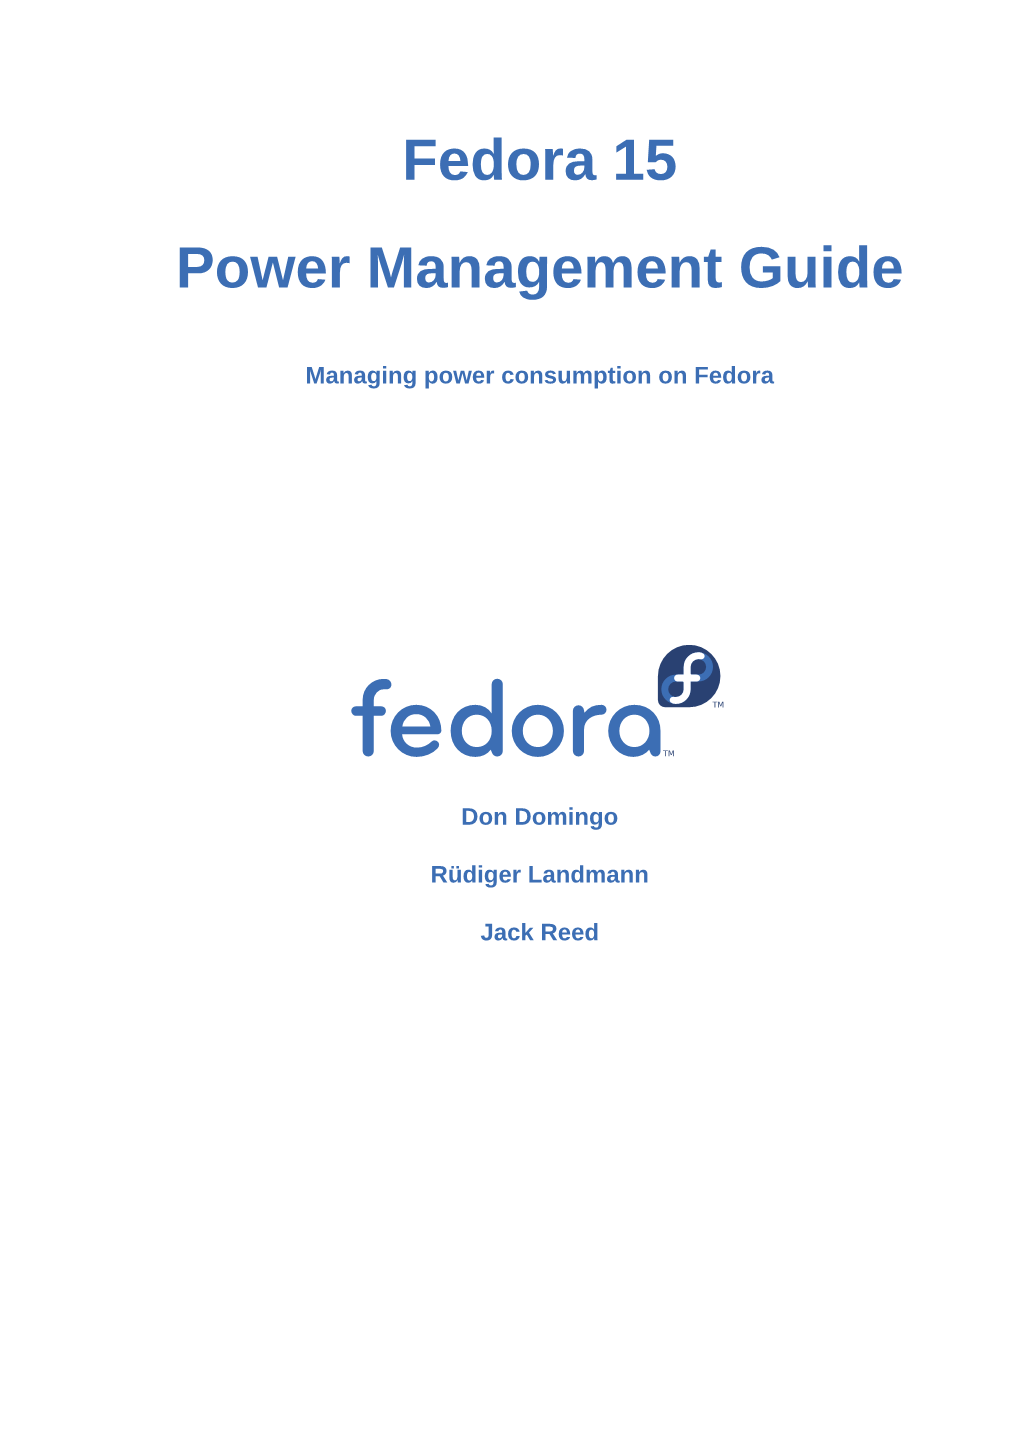 Managing Power Consumption on Fedora